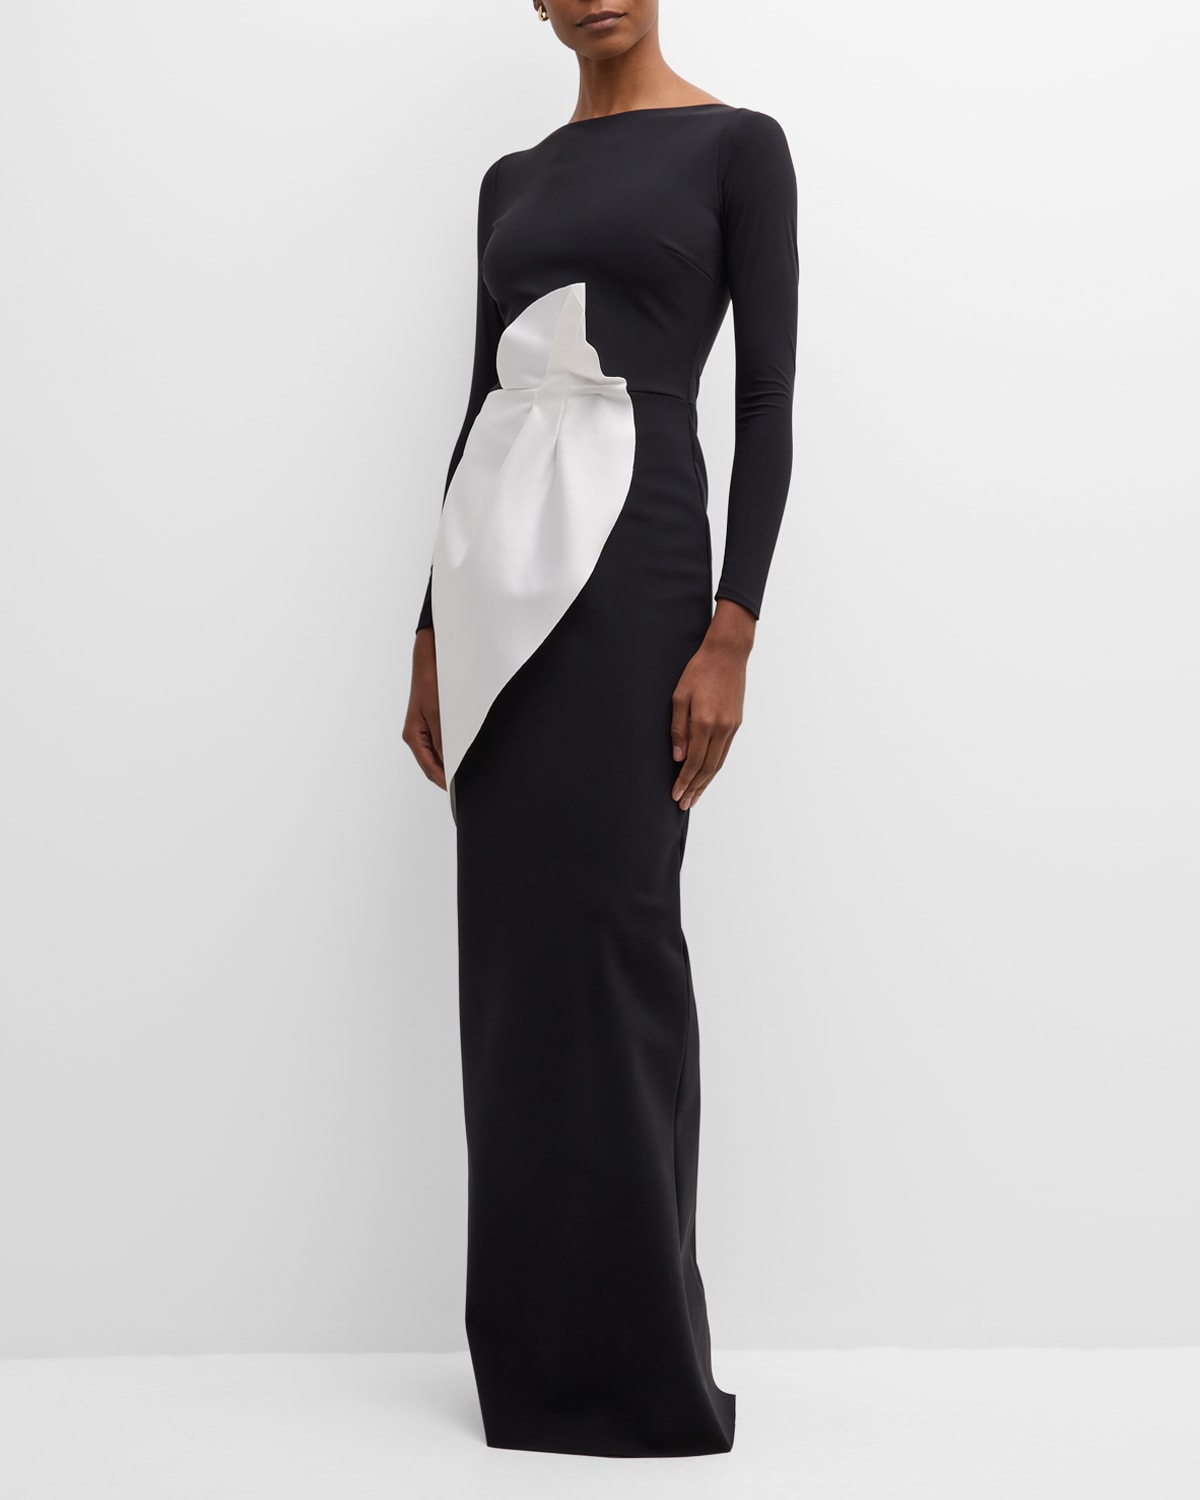 Chiara Boni La Petite Robe Two-tone Boat-neck Column Gown In Blackwhite